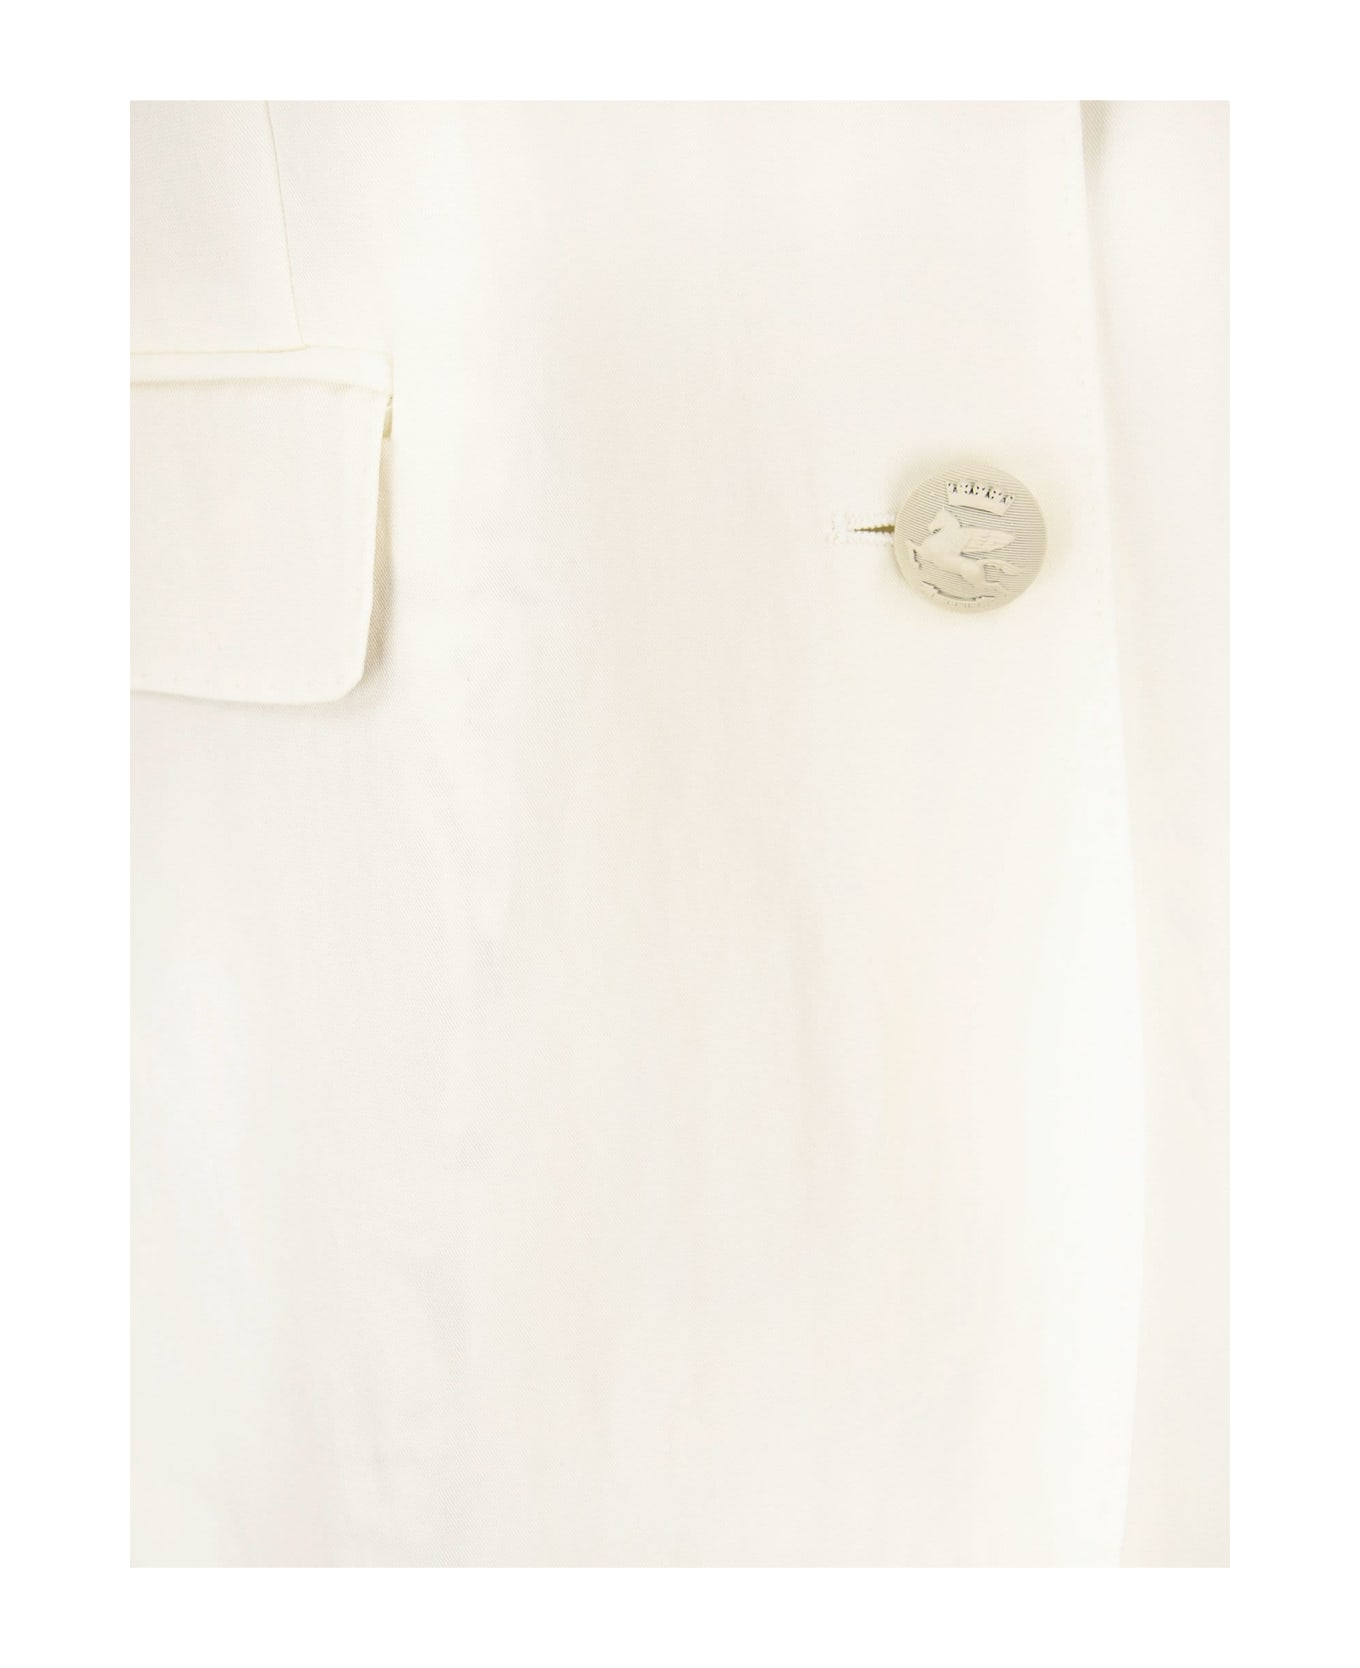 Etro Lyocell Tailored Jacket - White